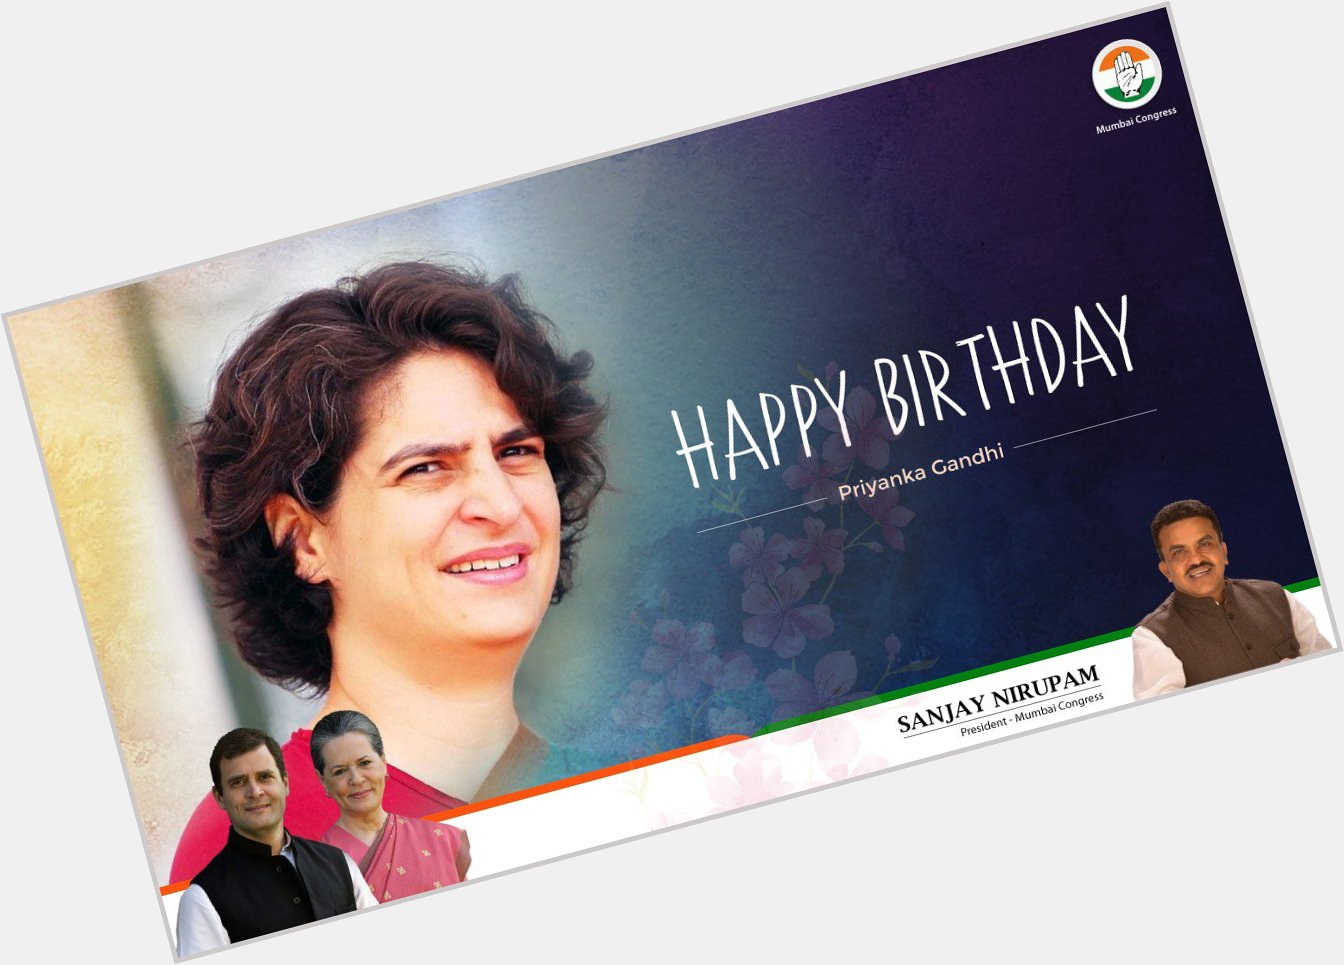 Happy Birthday priyanka Gandhi 
Didi 